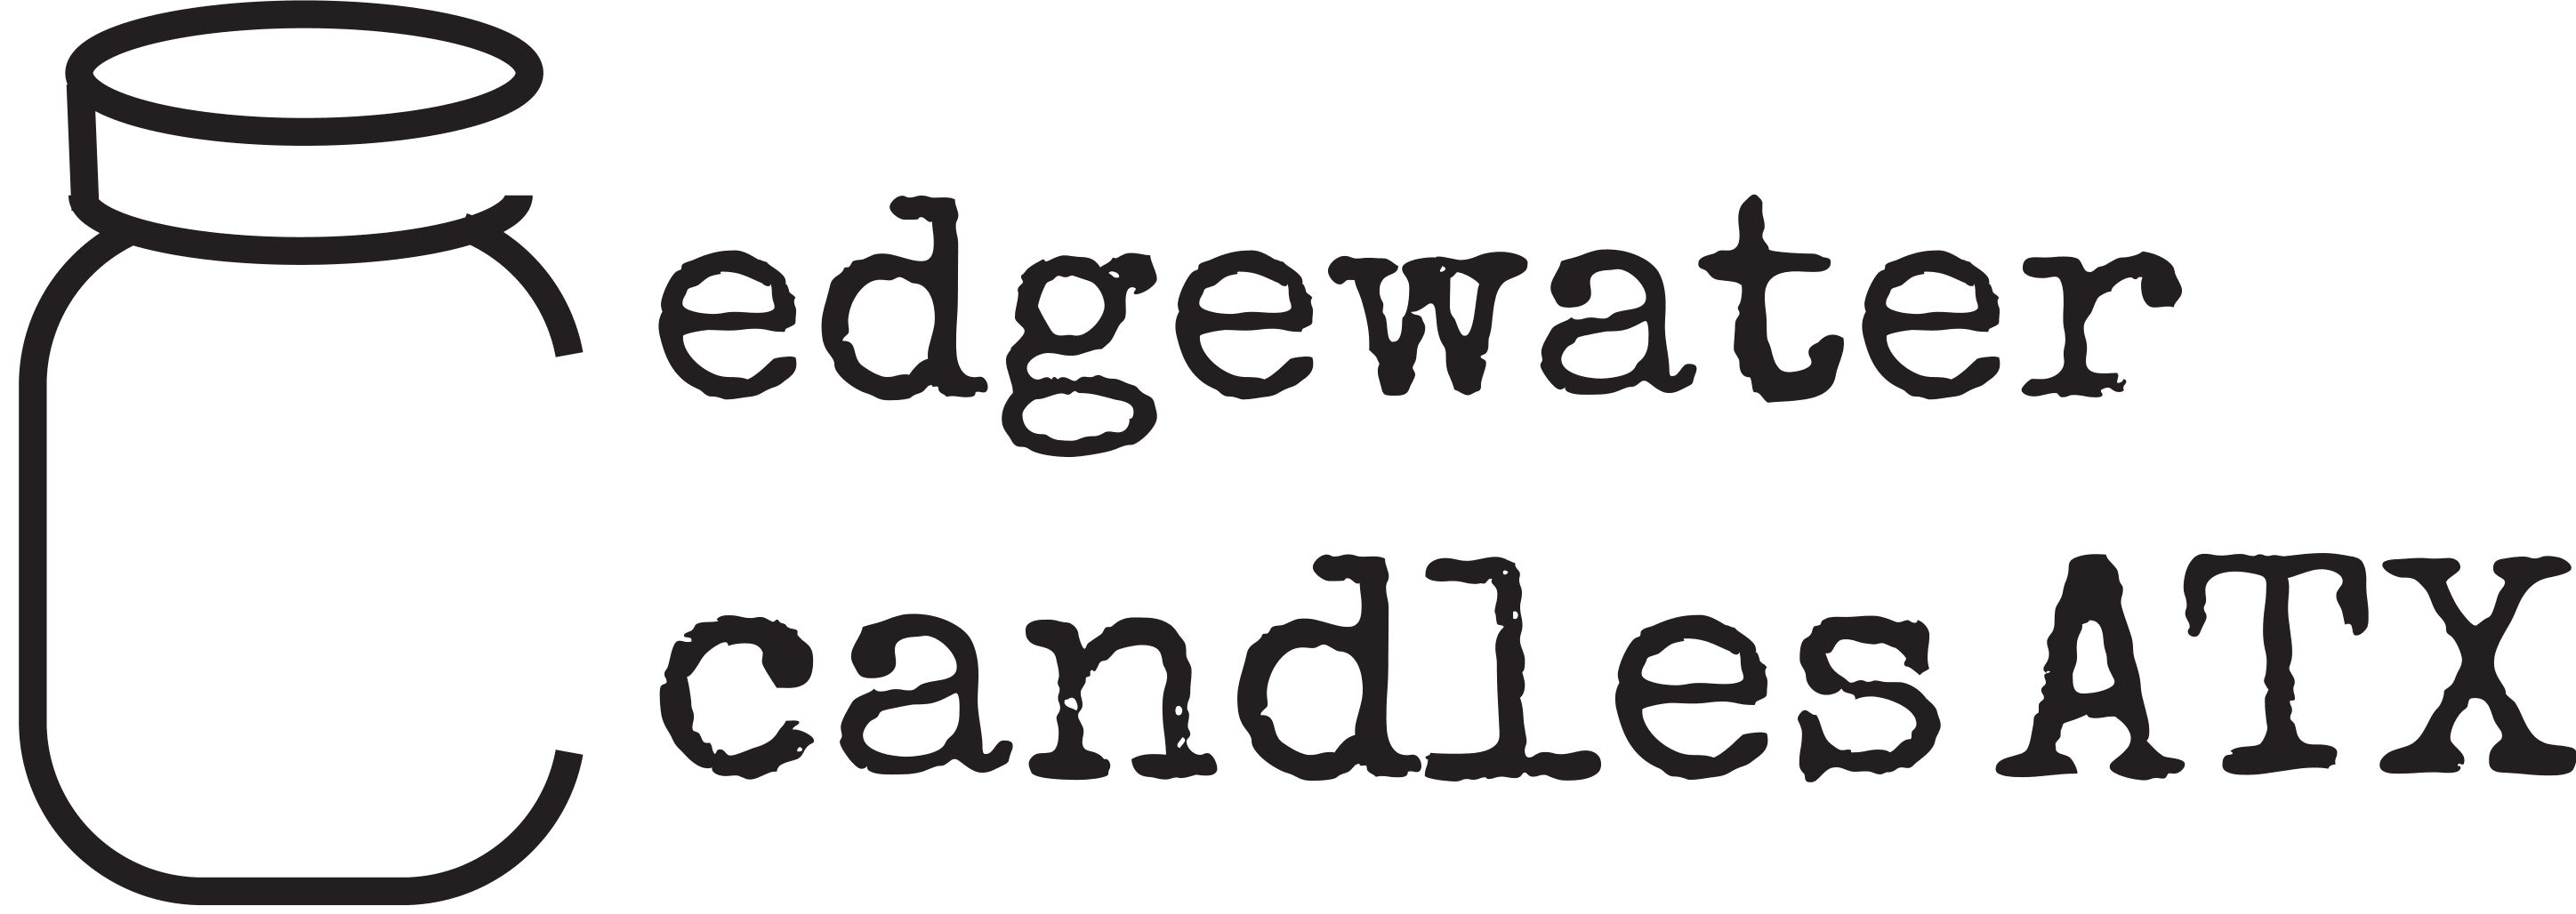 Edgewater Candles ATX